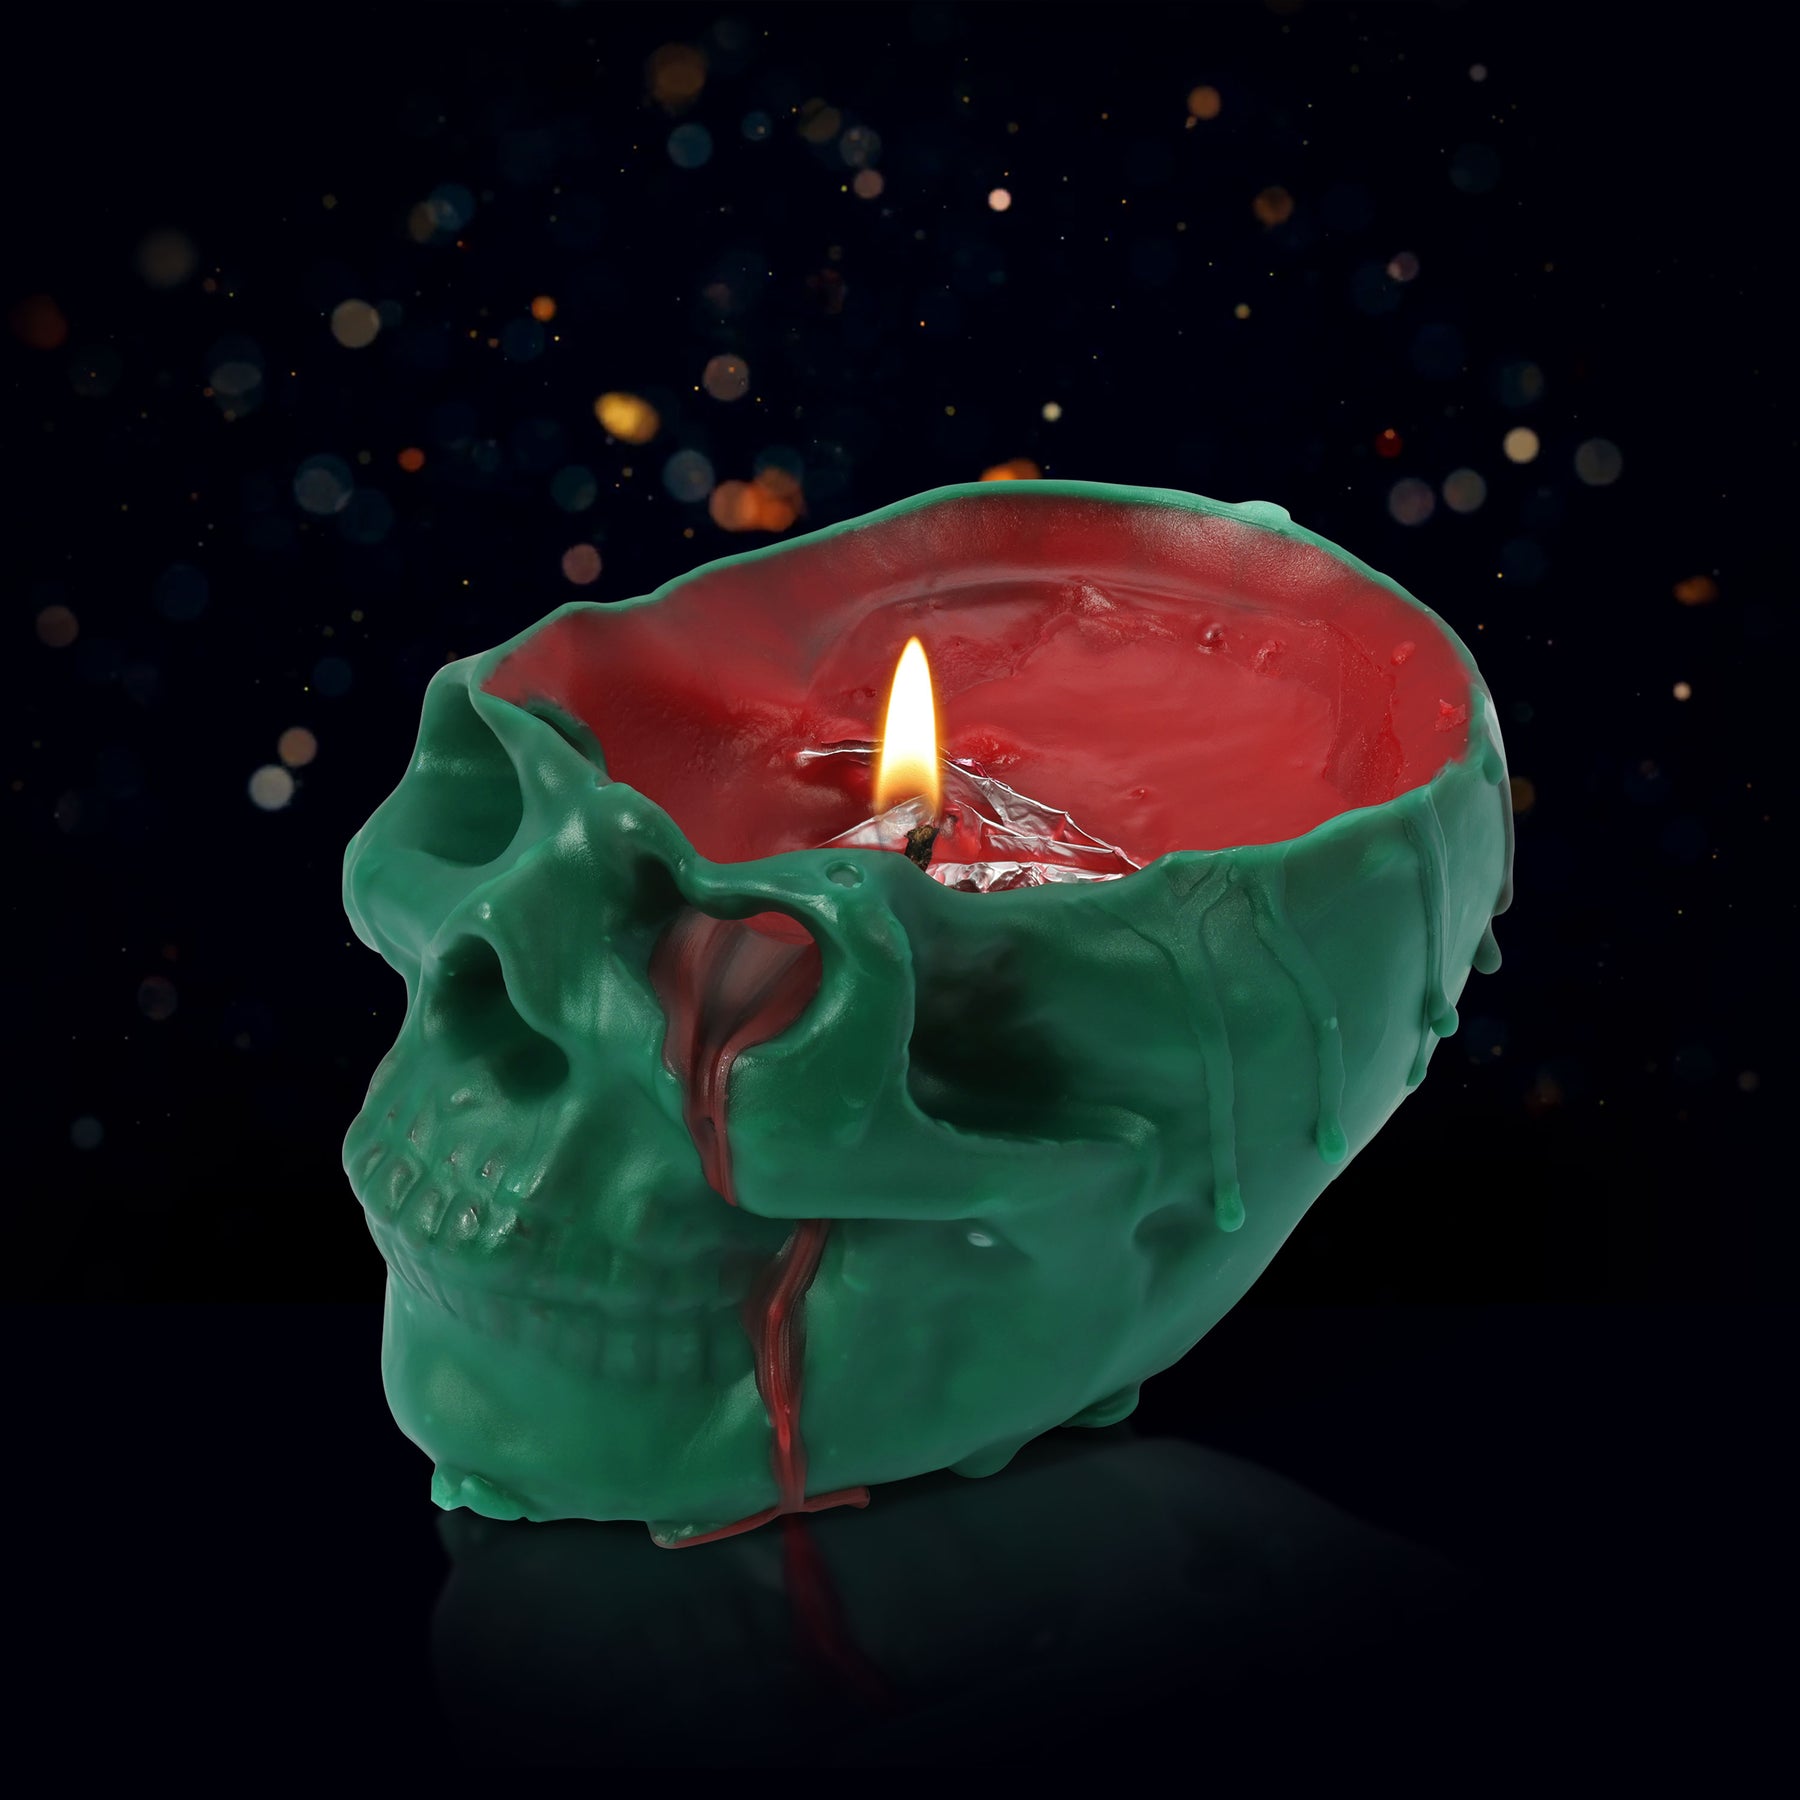 Yule Ghoul - Christmas Skull Pillar Candle